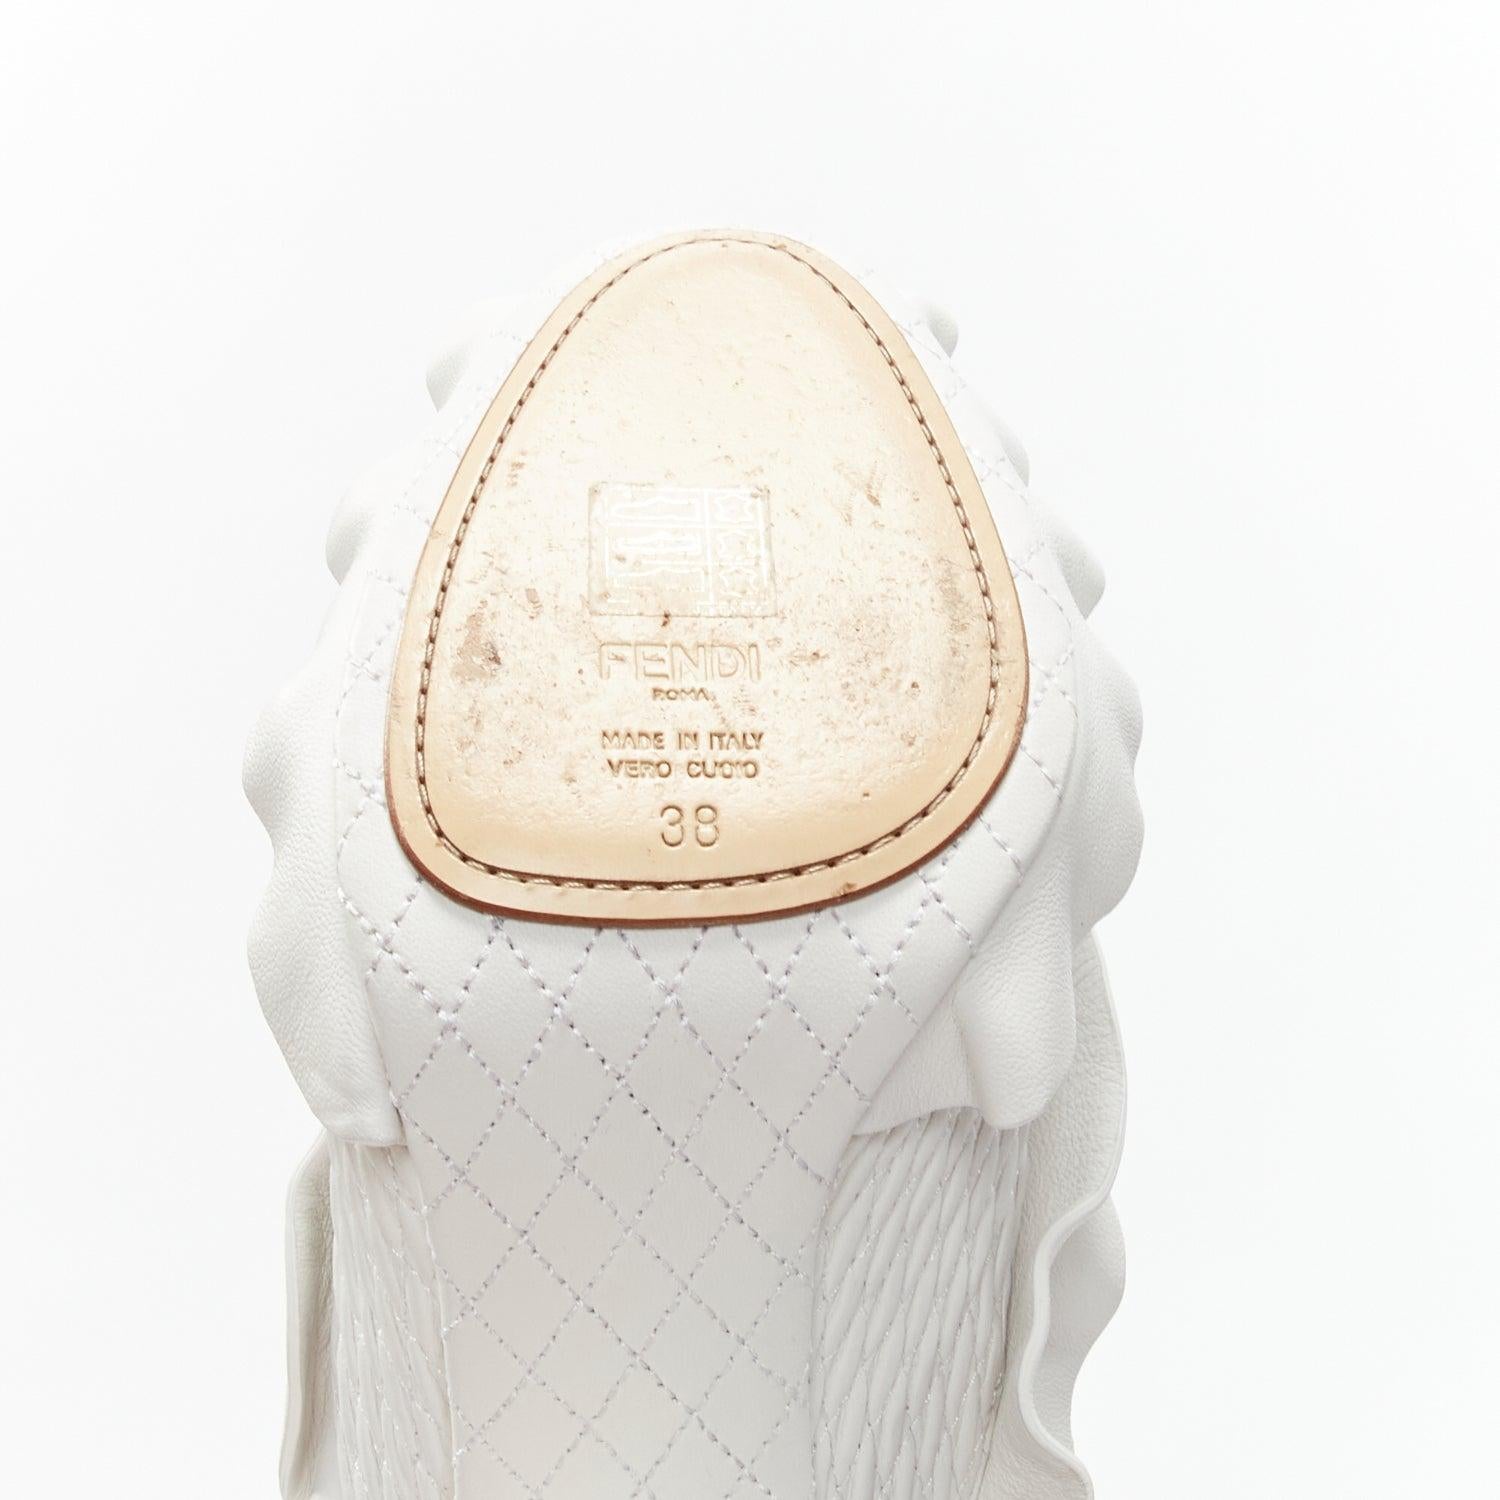 FENDI Runway white textured leather ruffle tiered cone heels booties EU38 7